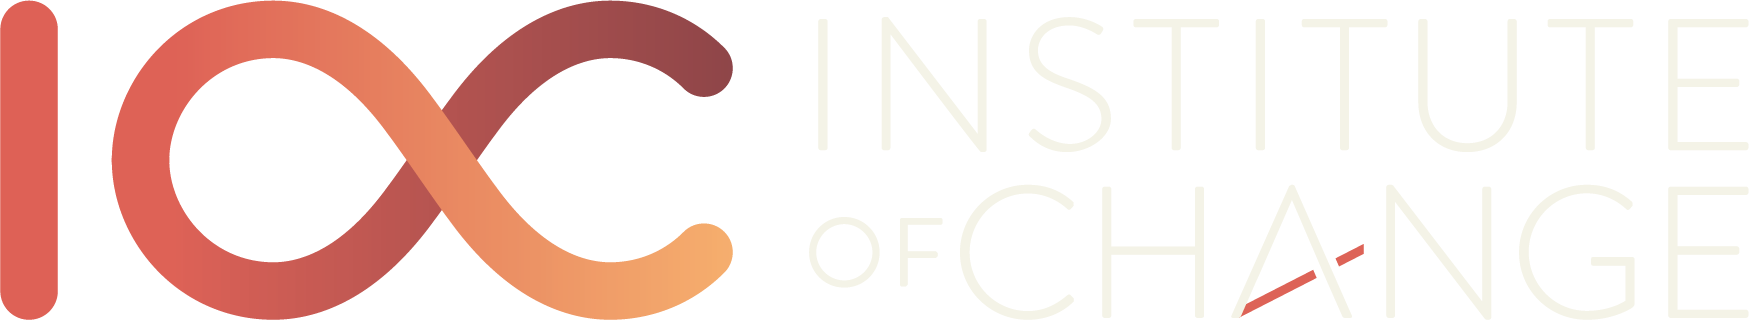 Institute Of Change